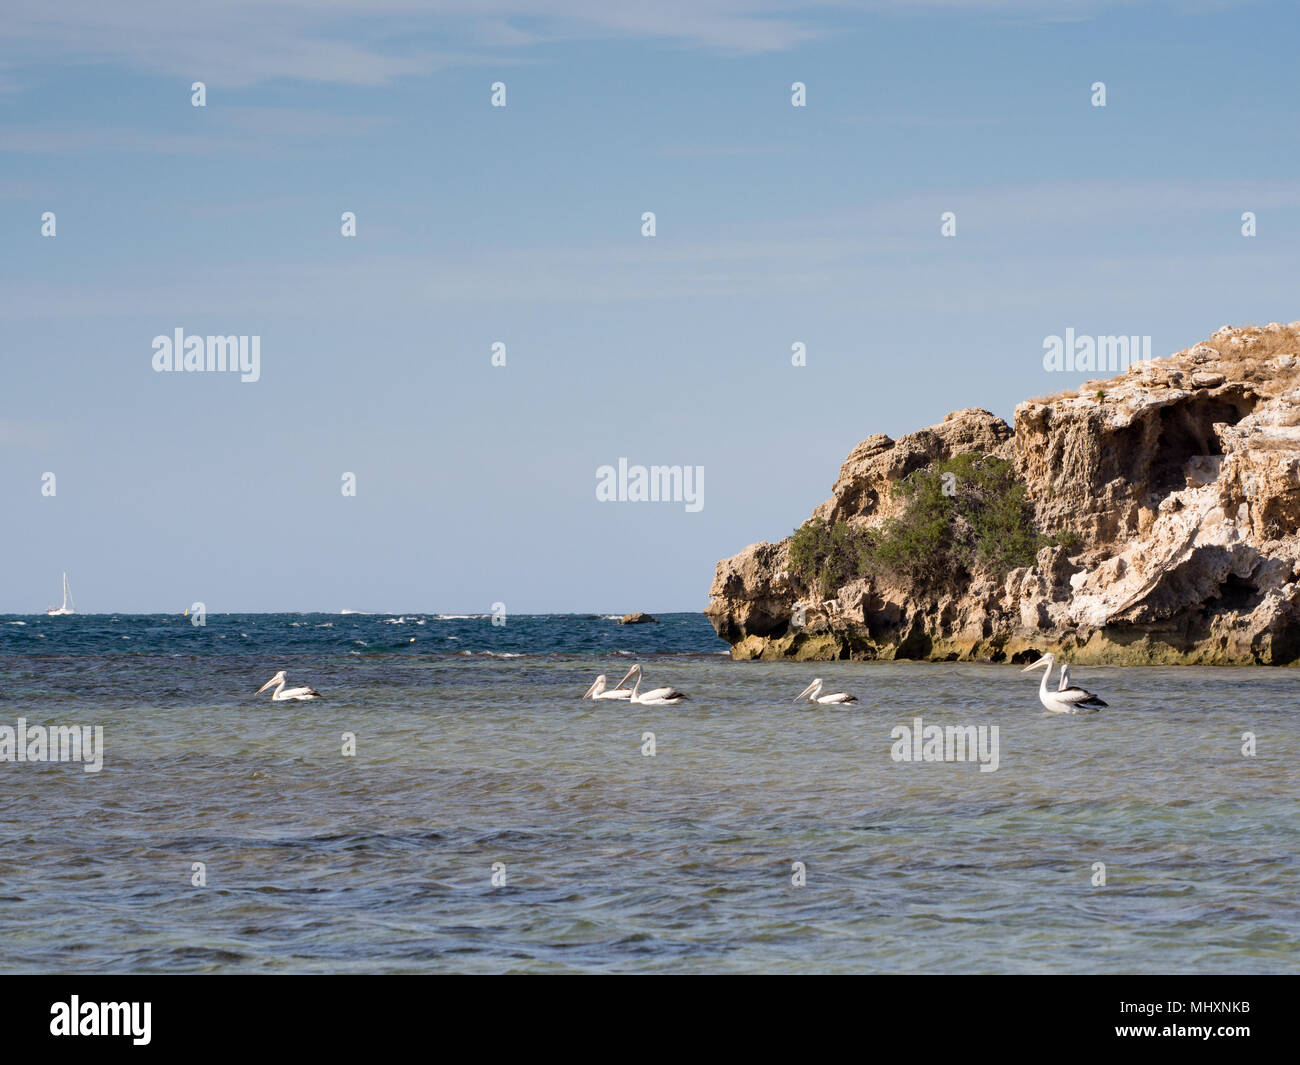 Pelicans swimming in the ocean, Penguin Island, Western Australia Stock Photo